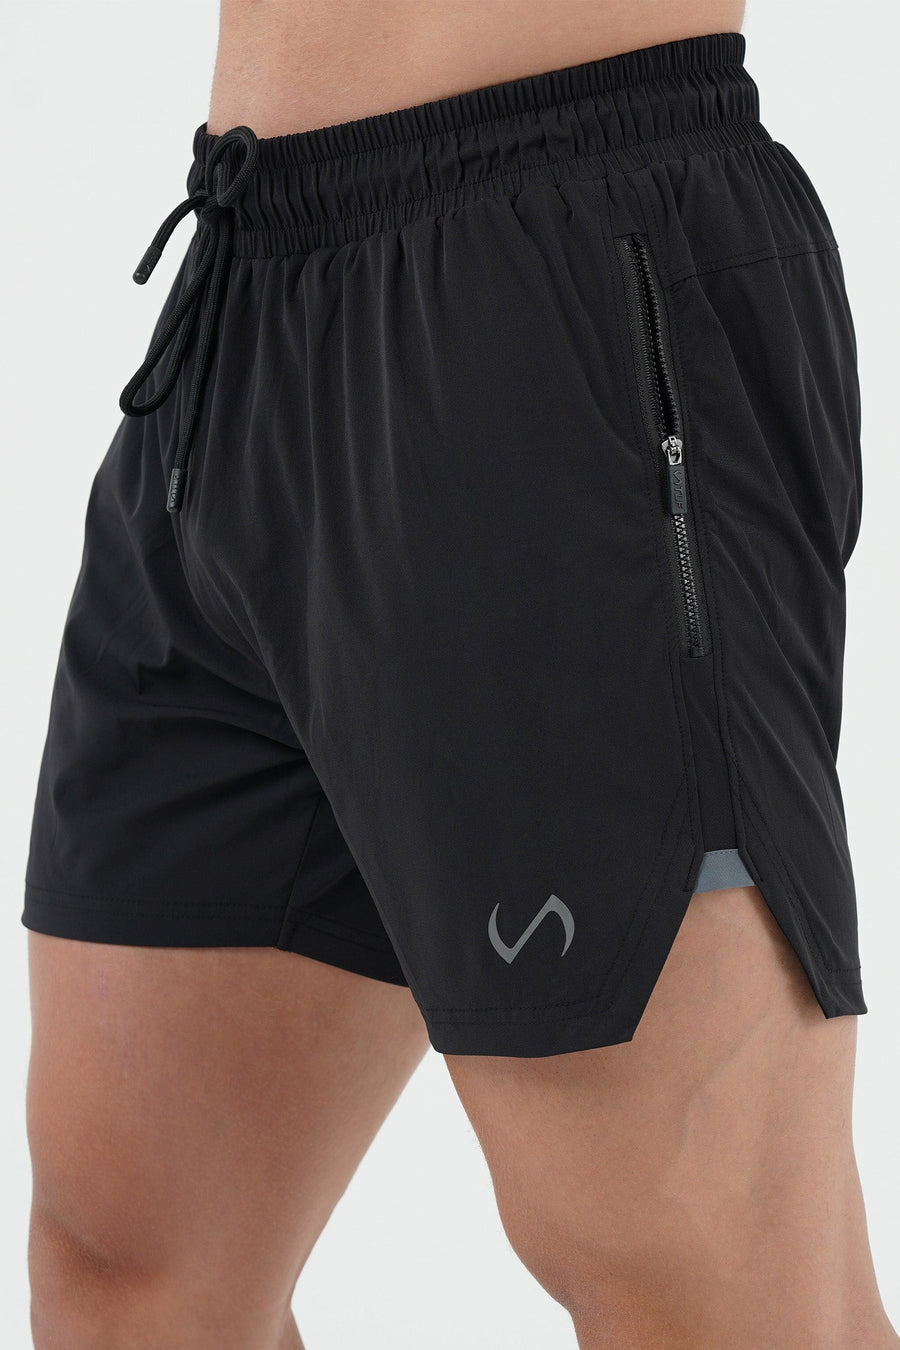 TLF Vital Element 5” Gym Shorts - 5 Inch inseam Shorts - Black - 2